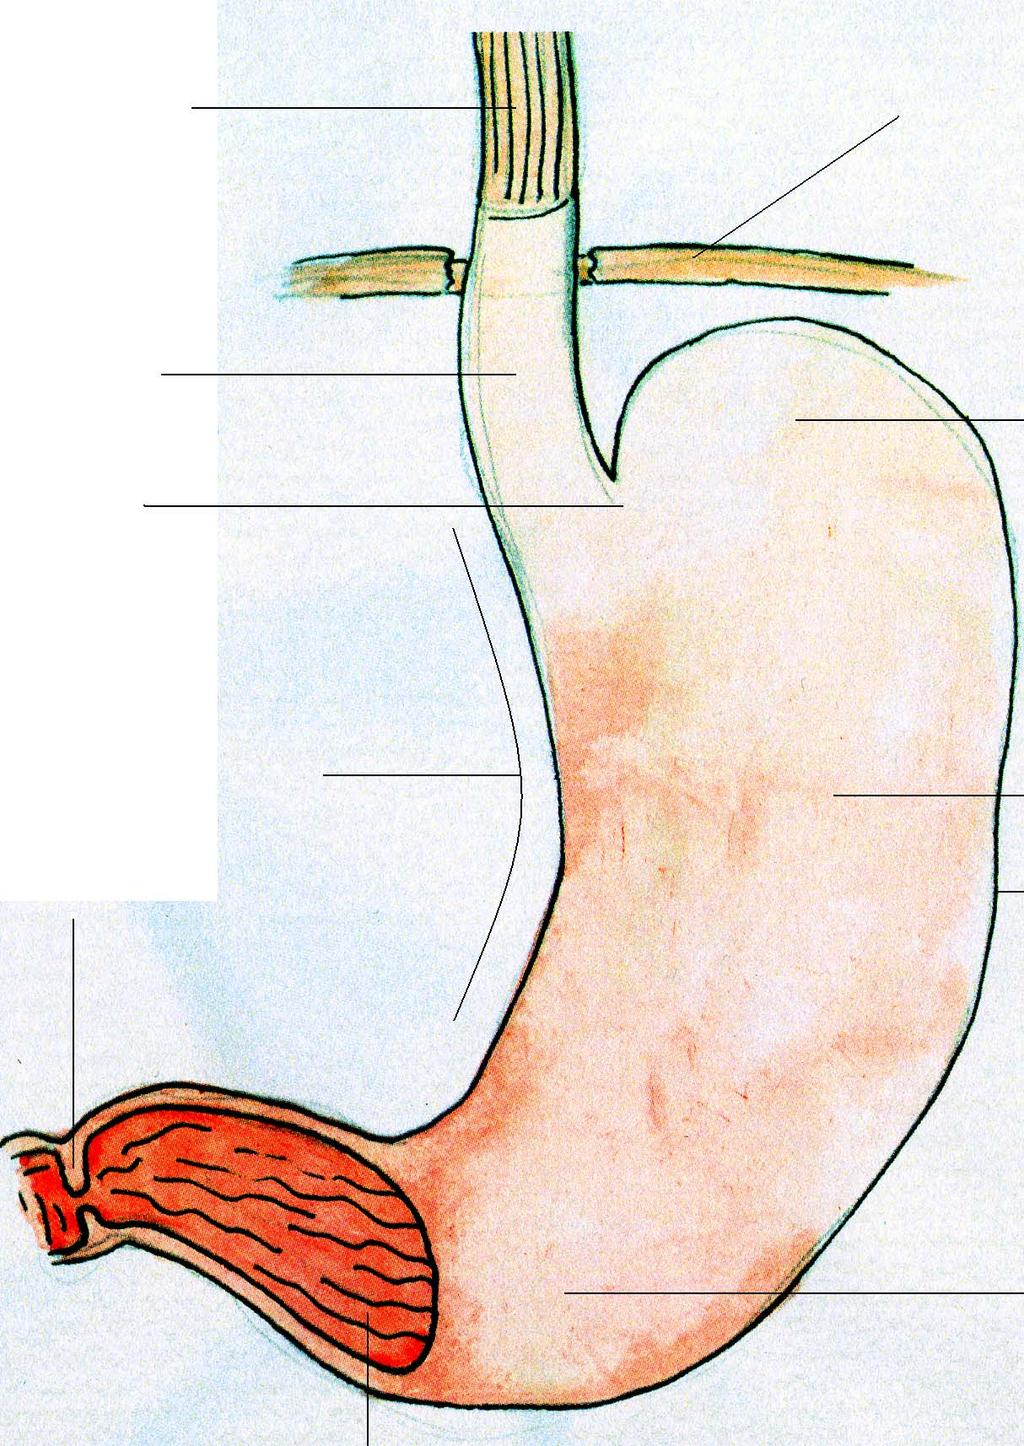 En matstrupe Pars thoracalis Ett mellangärde/ diafragma EN MAGE Pars abdominali s